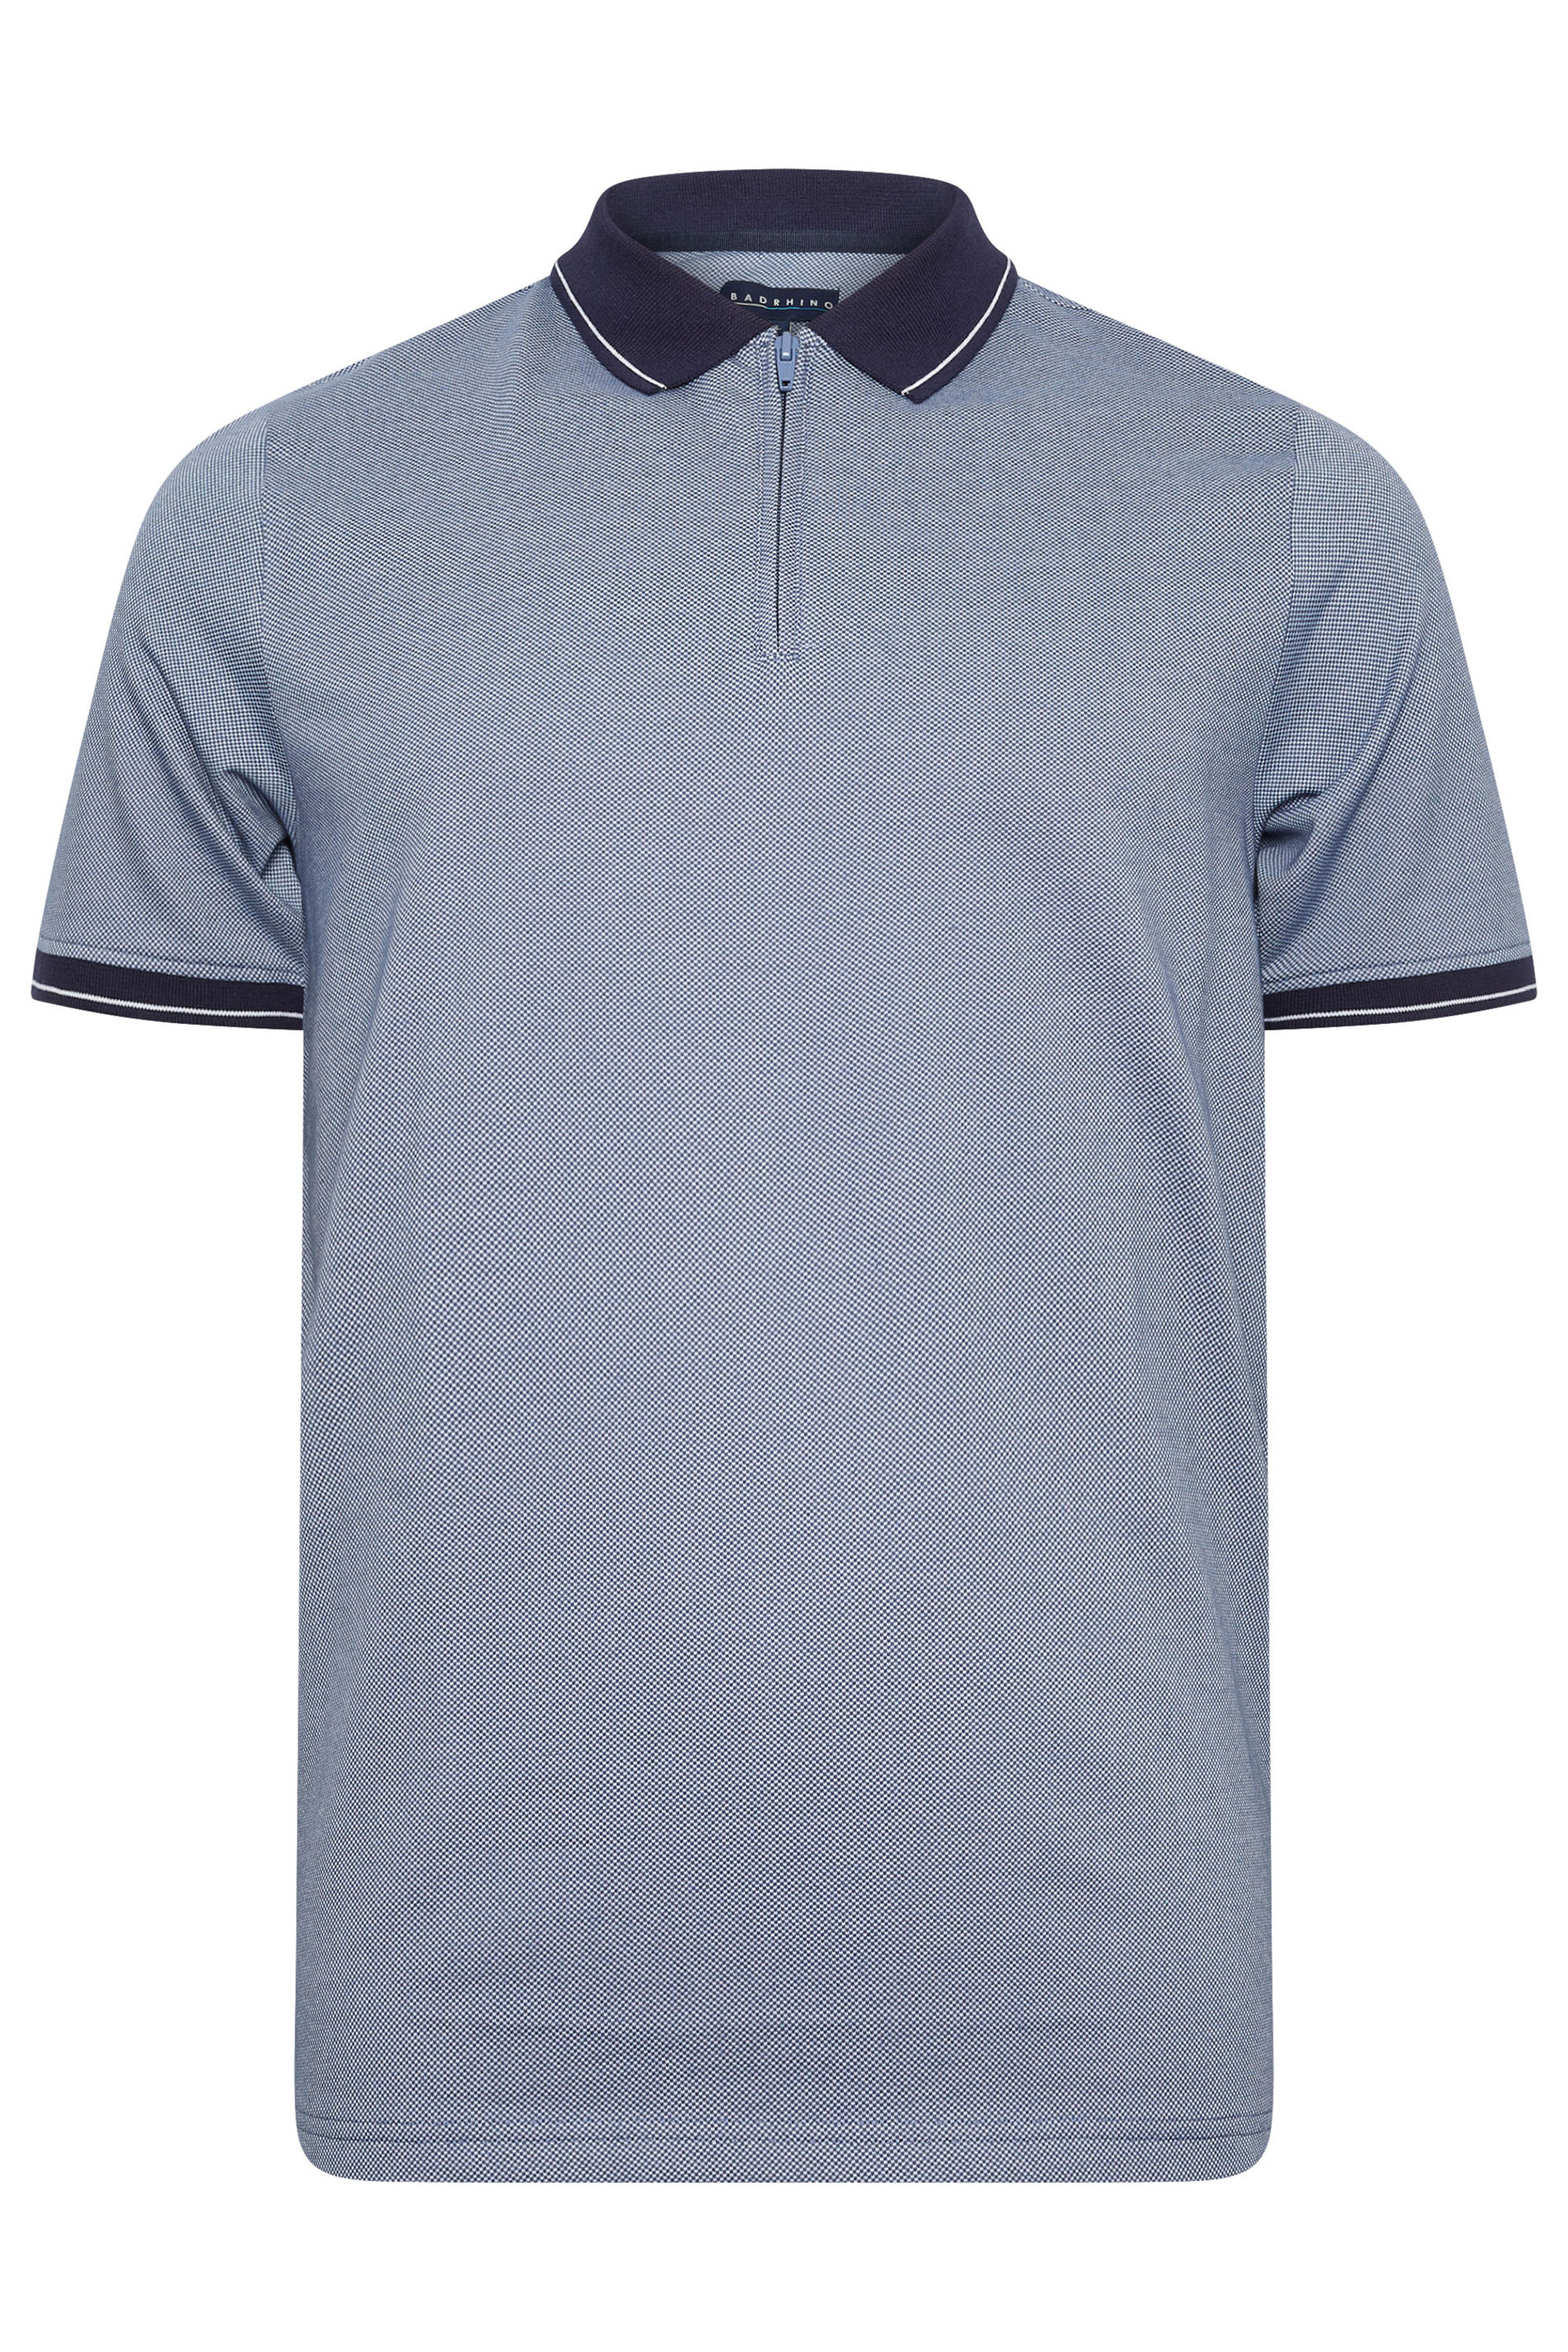 BadRhino Big & Tall Blue Textured Zip Neck Polo Shirt | BadRhino 2